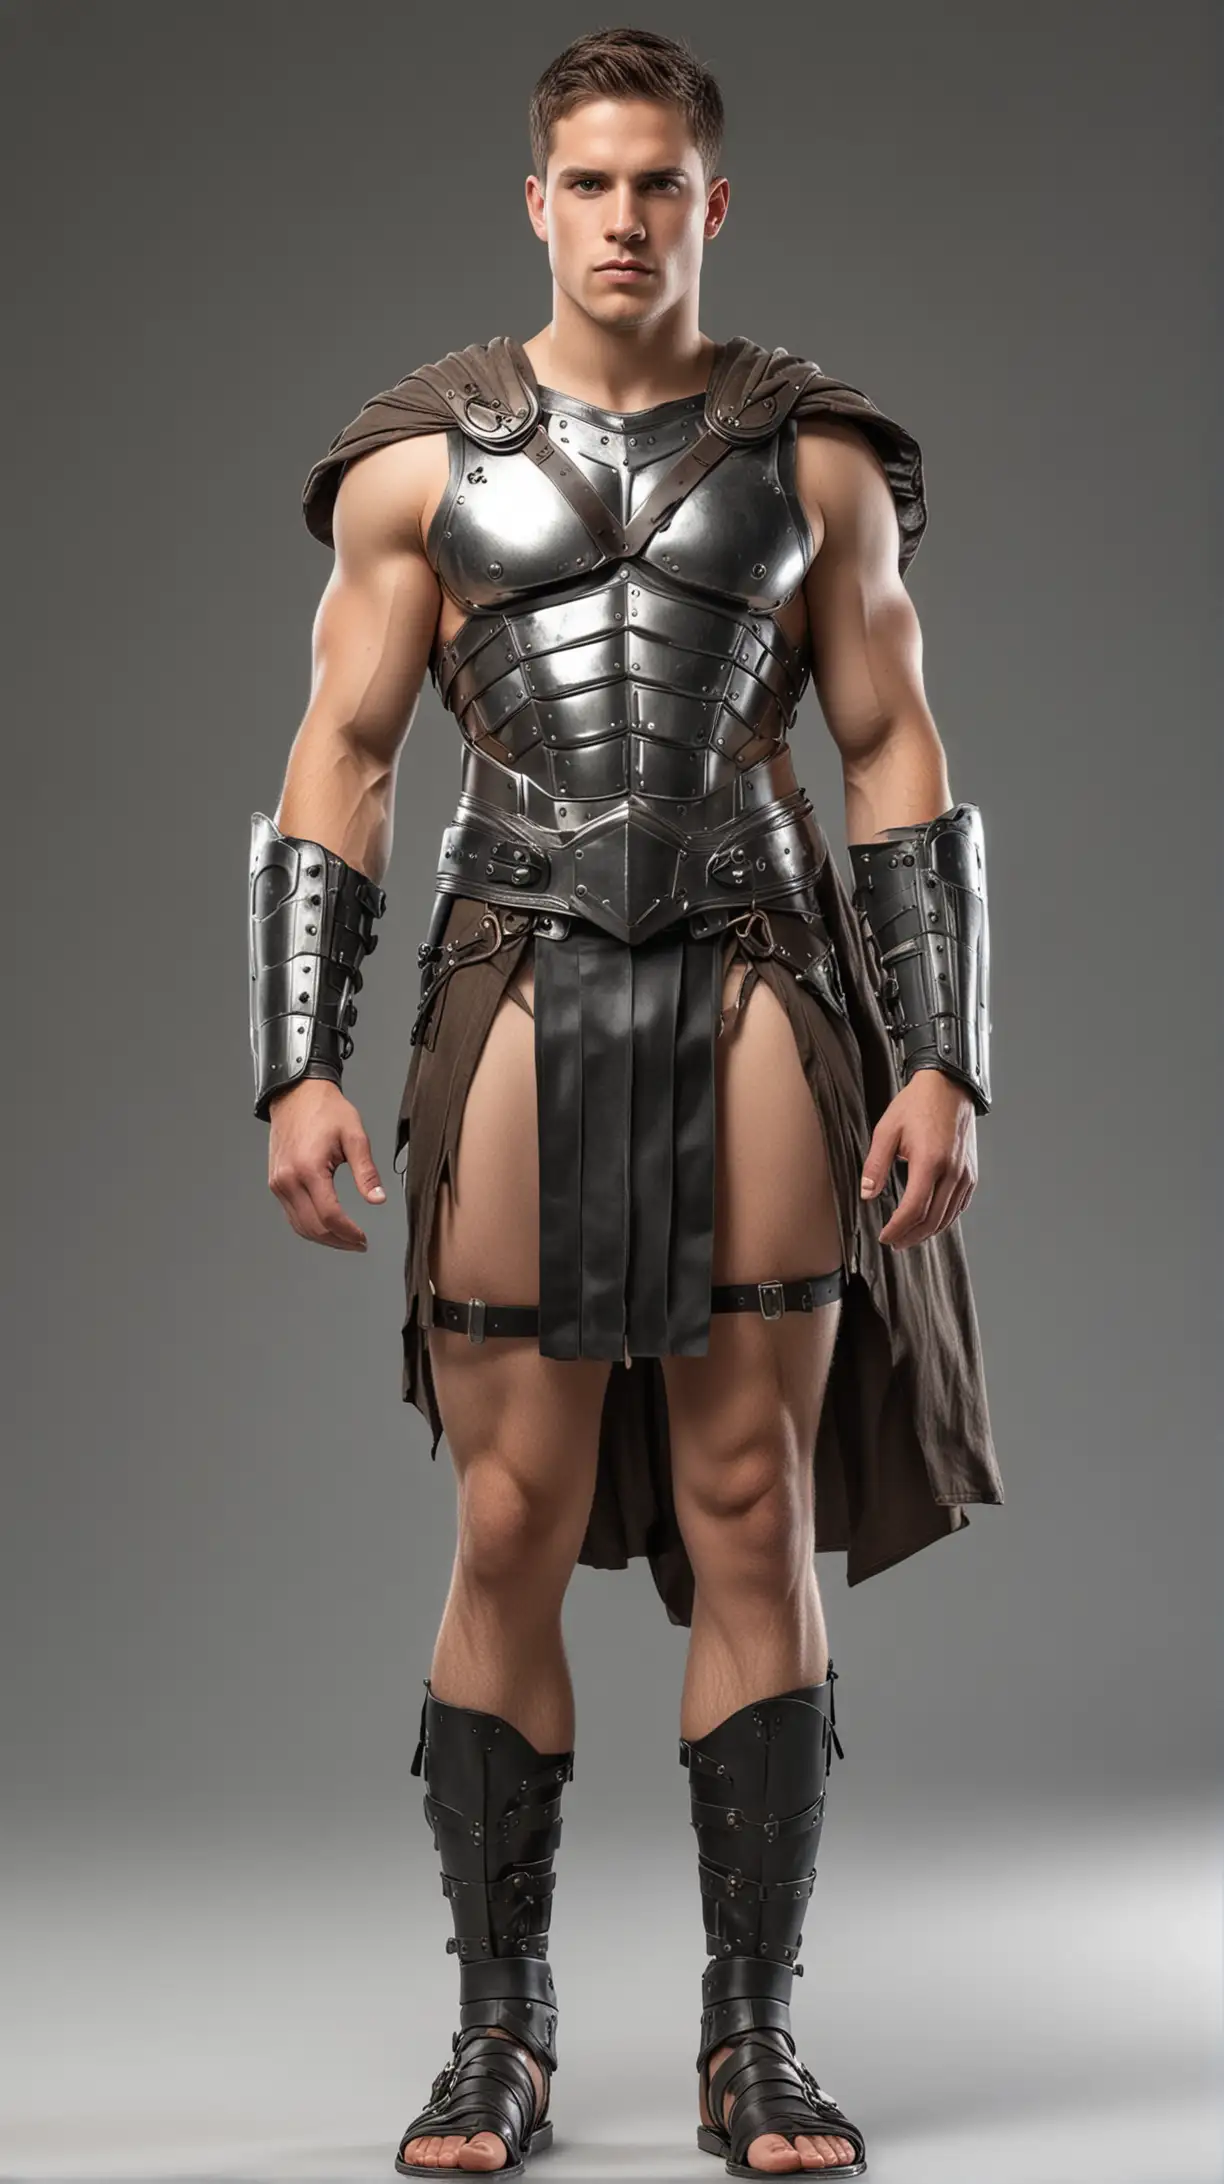 Powerful Spartan Warrior in Heavy Steel Body Armor and Cloak